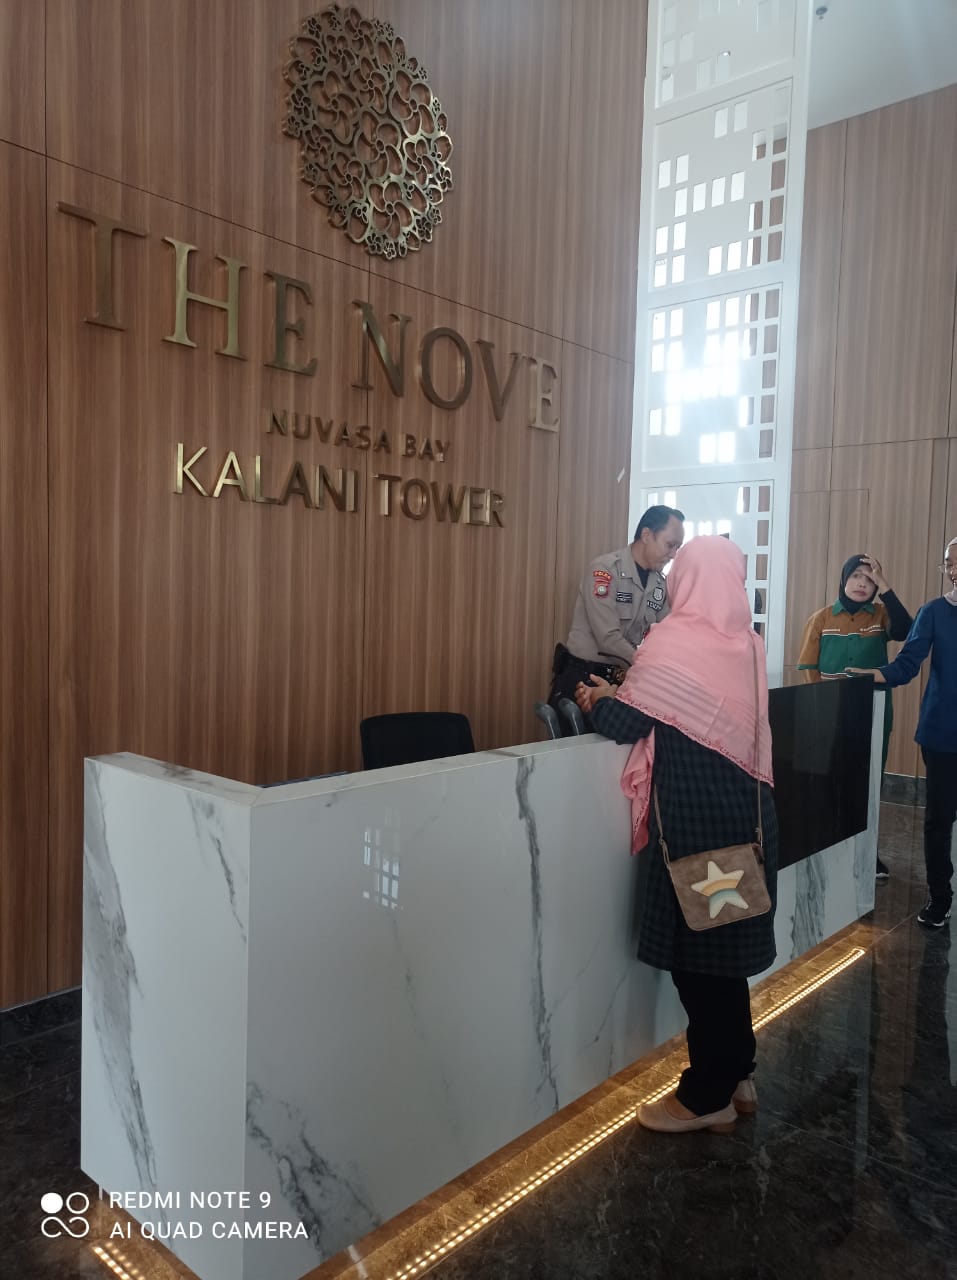 The Nove Nuvasabay Kalani Tower- Menixnews